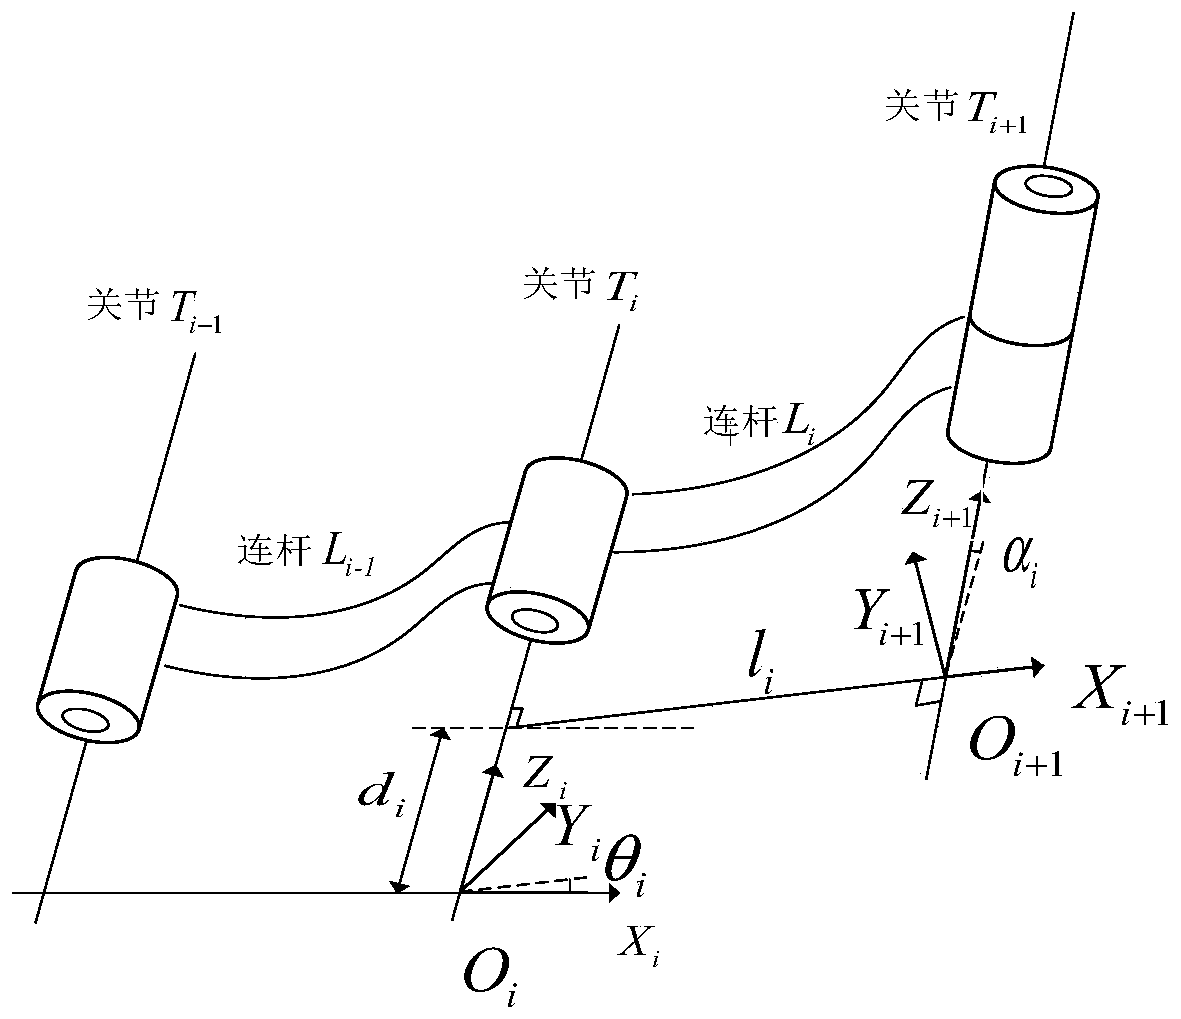 Circular grating eccentricity parameter calibration method of flexible arm coordinate measuring machine